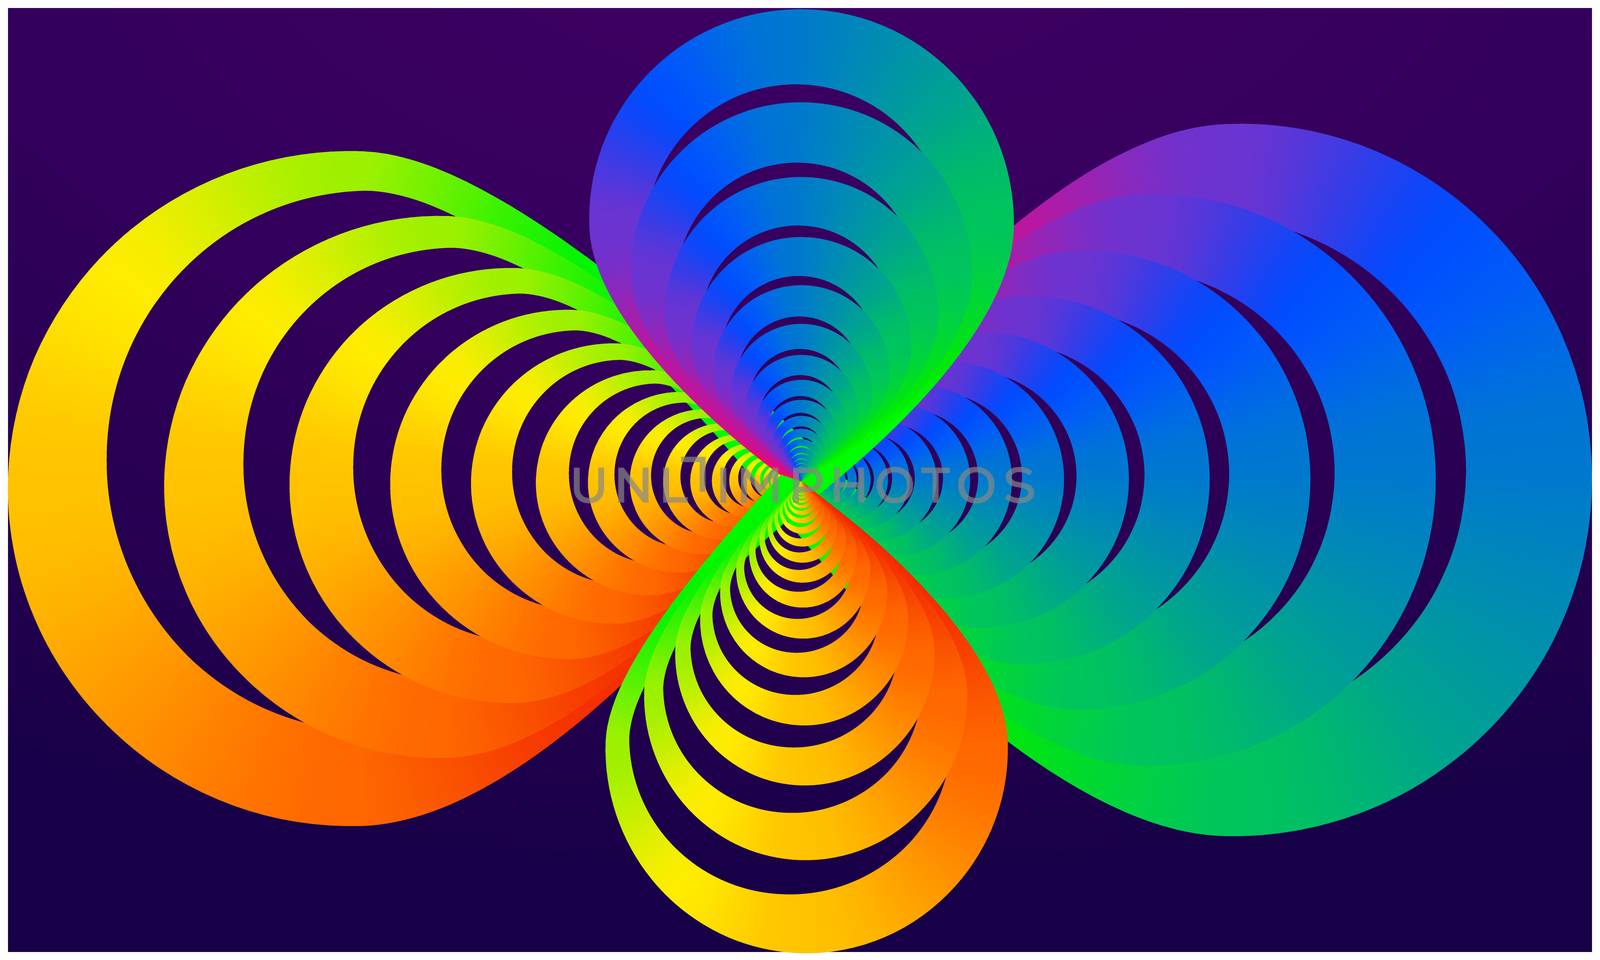 digital textile design of rainbow infinite symbol on abstract background by aanavcreationsplus